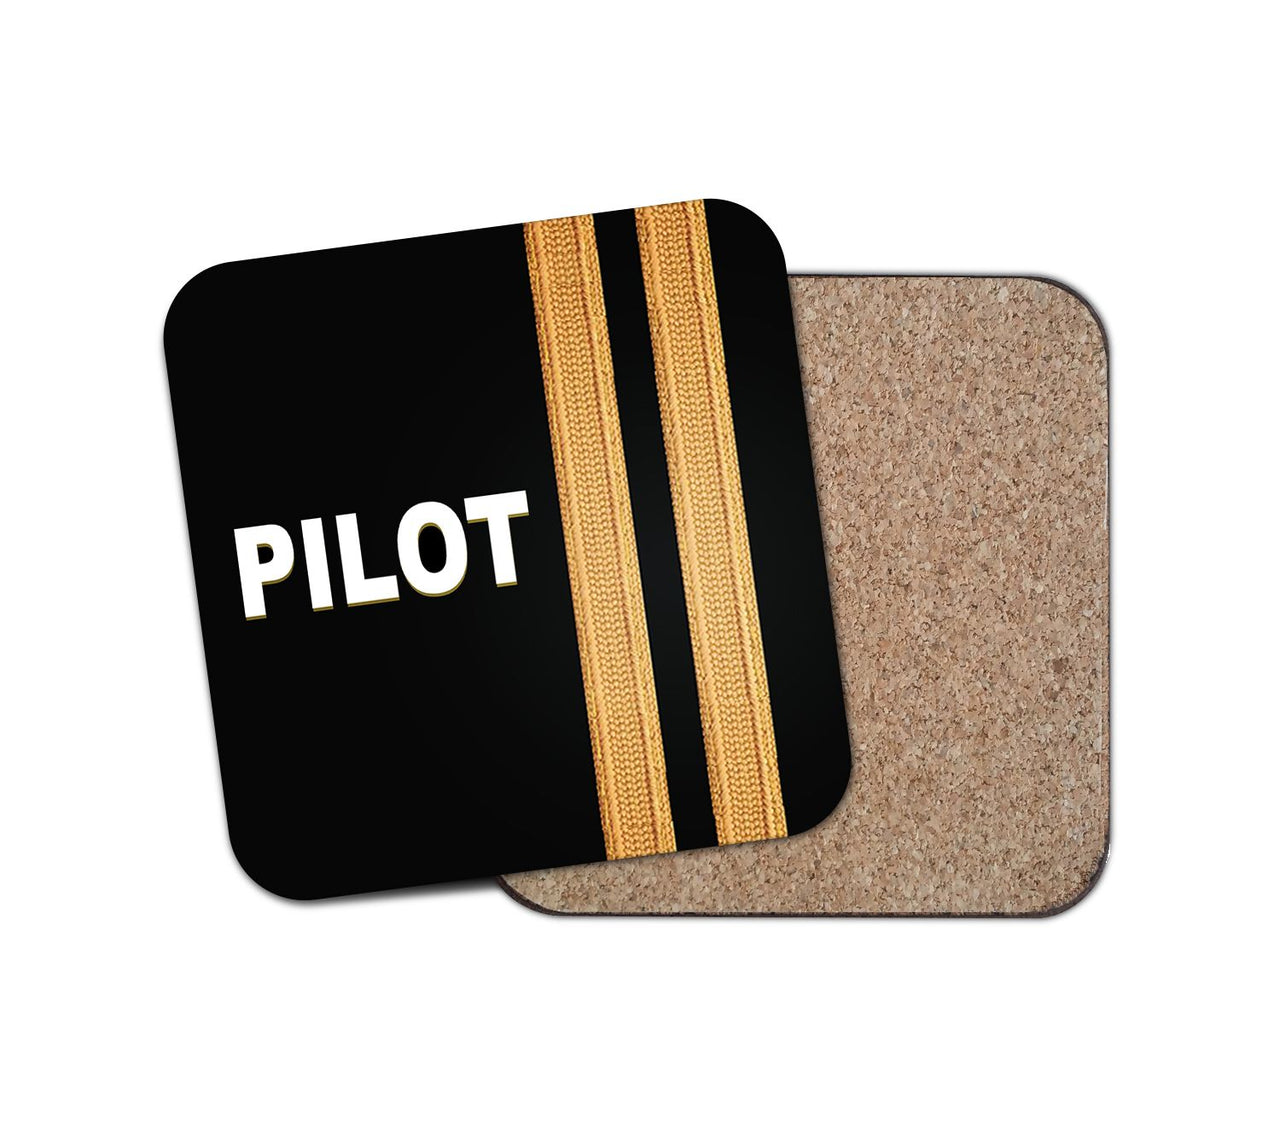 PILOT & Epaulettes 2 Lines Designed Coasters